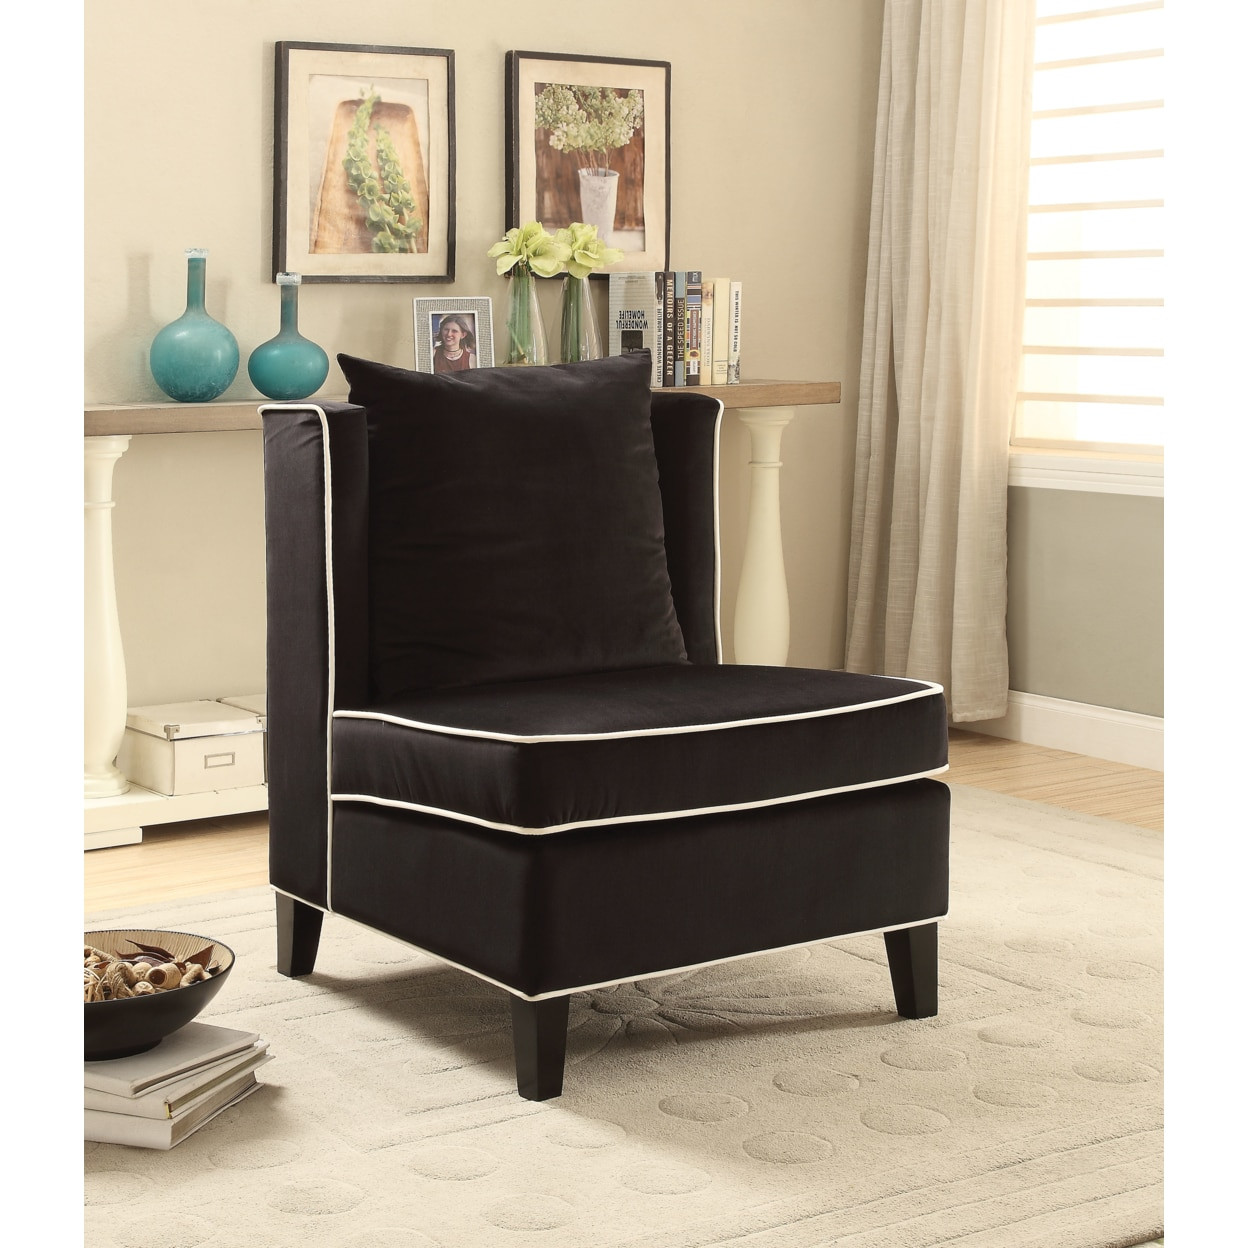 Velvet Living Room Chairs
 Modish Accent Chair Black Velvet in Living Room Chairs